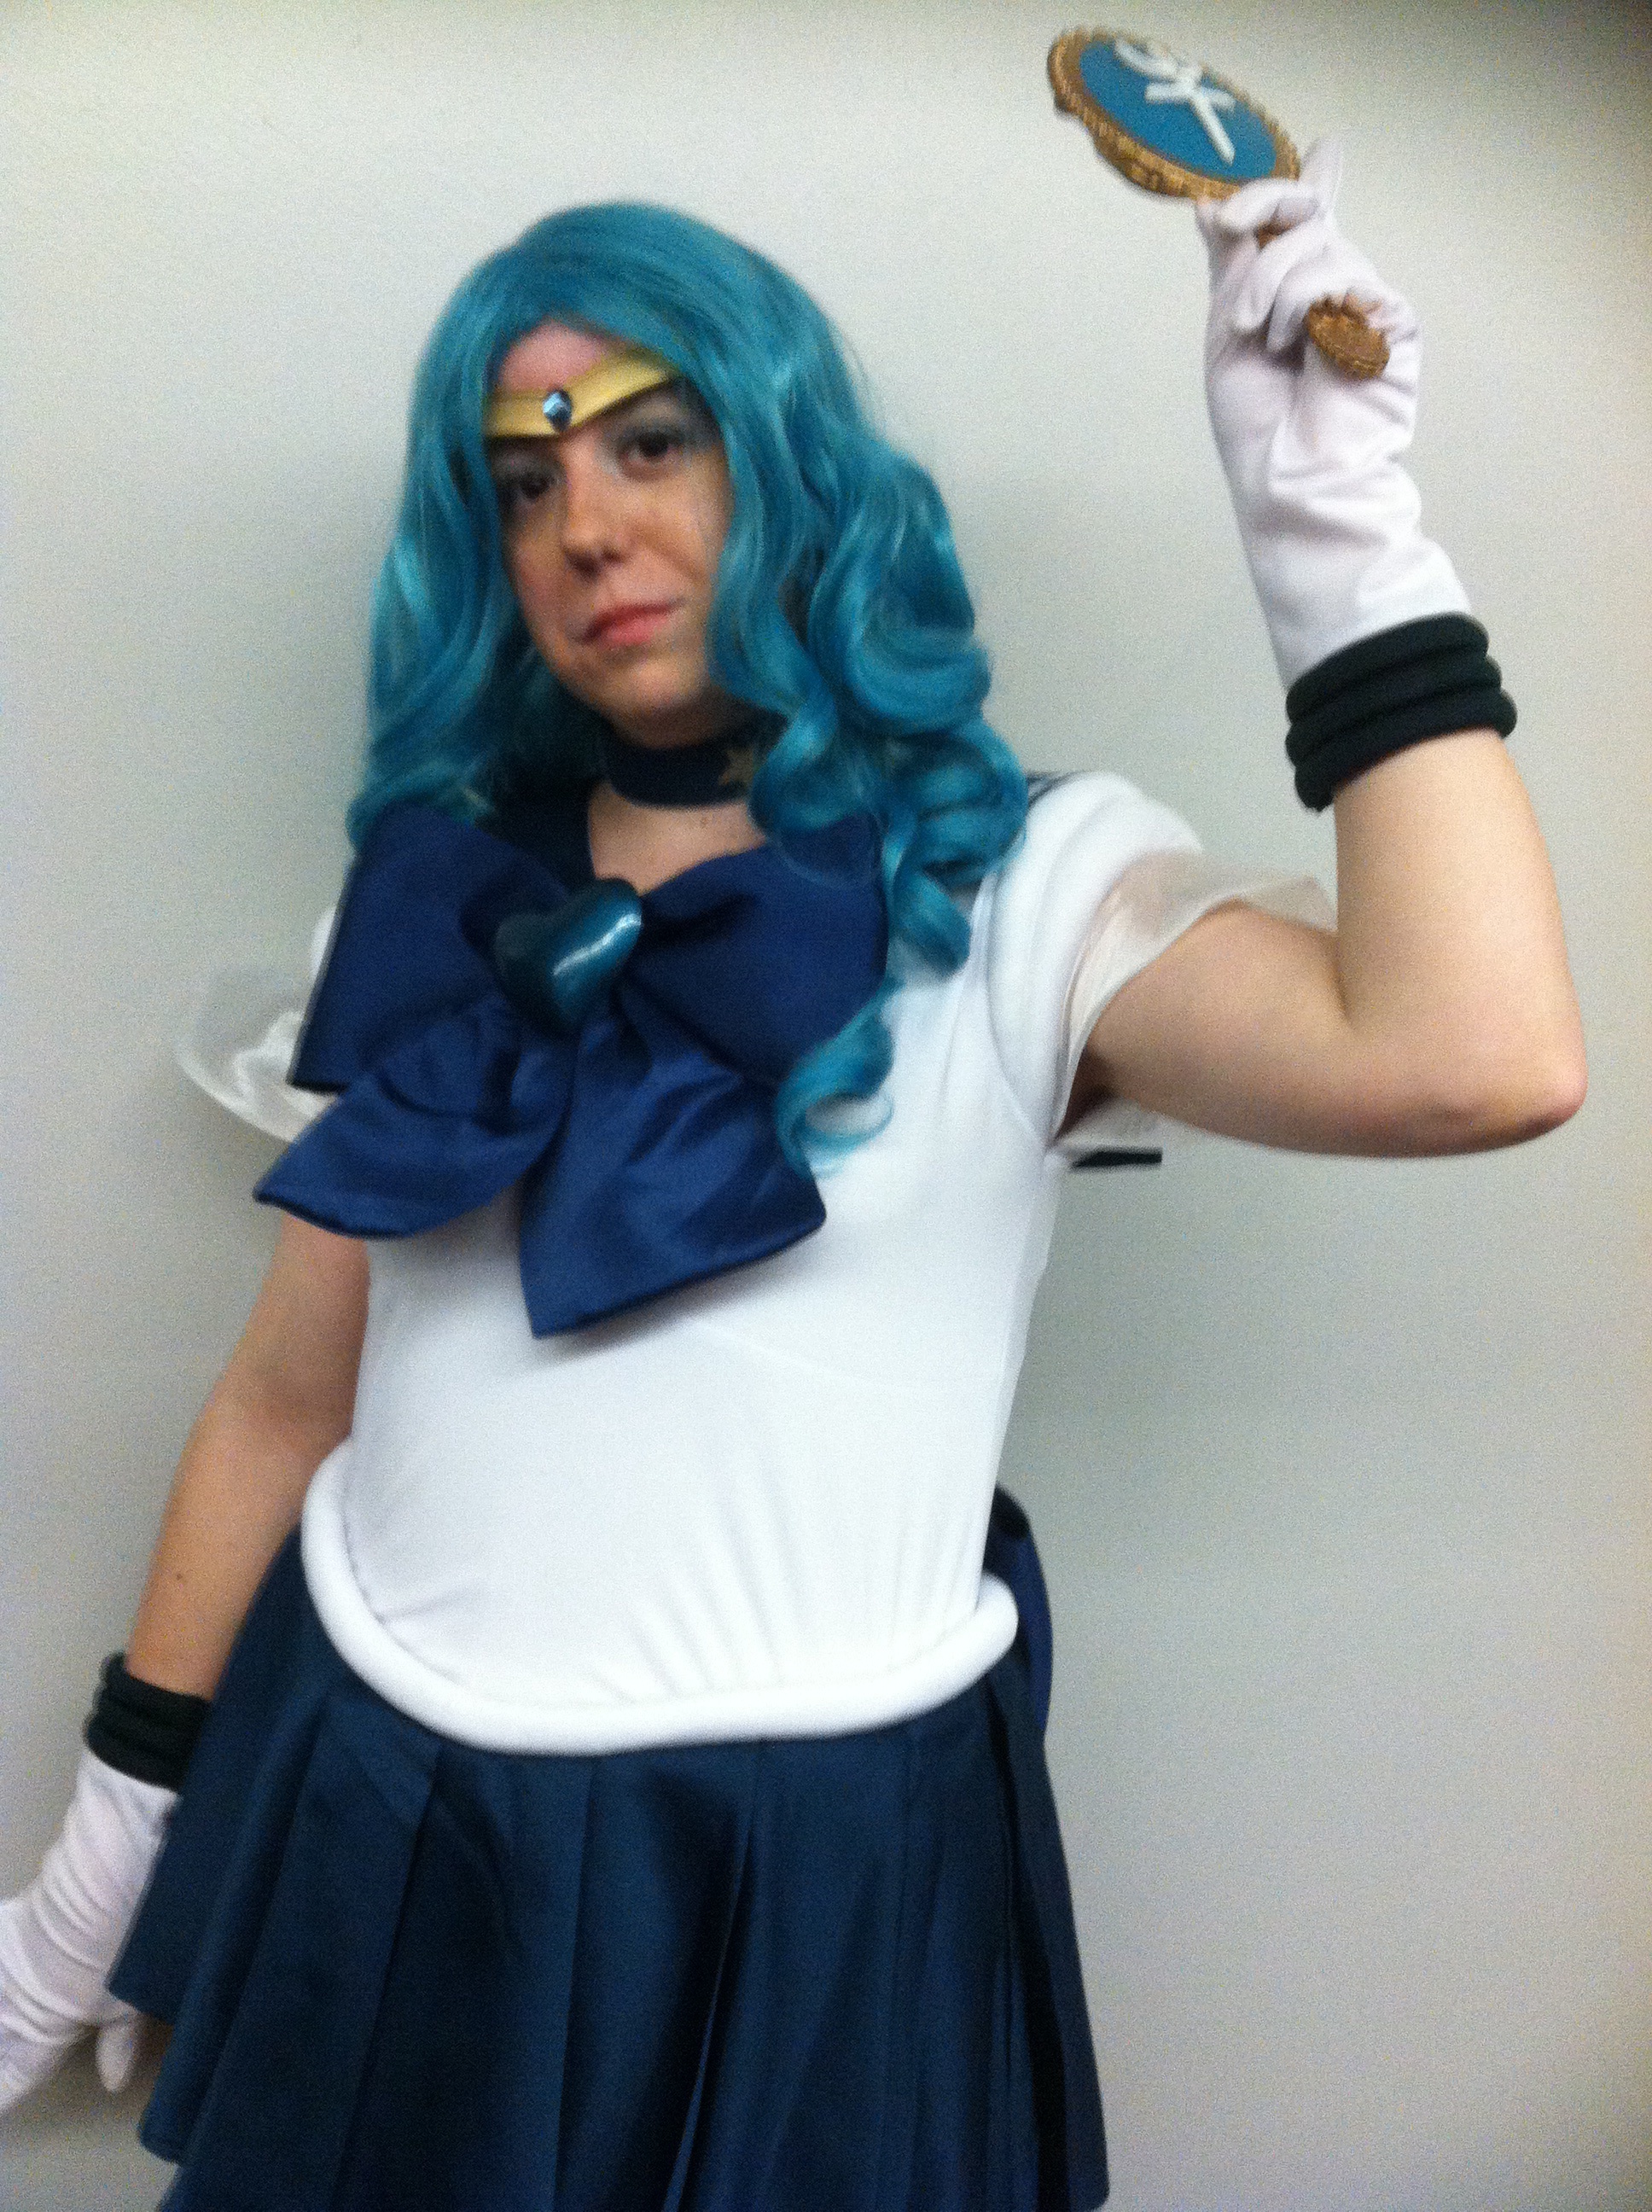 Sailor Neptune